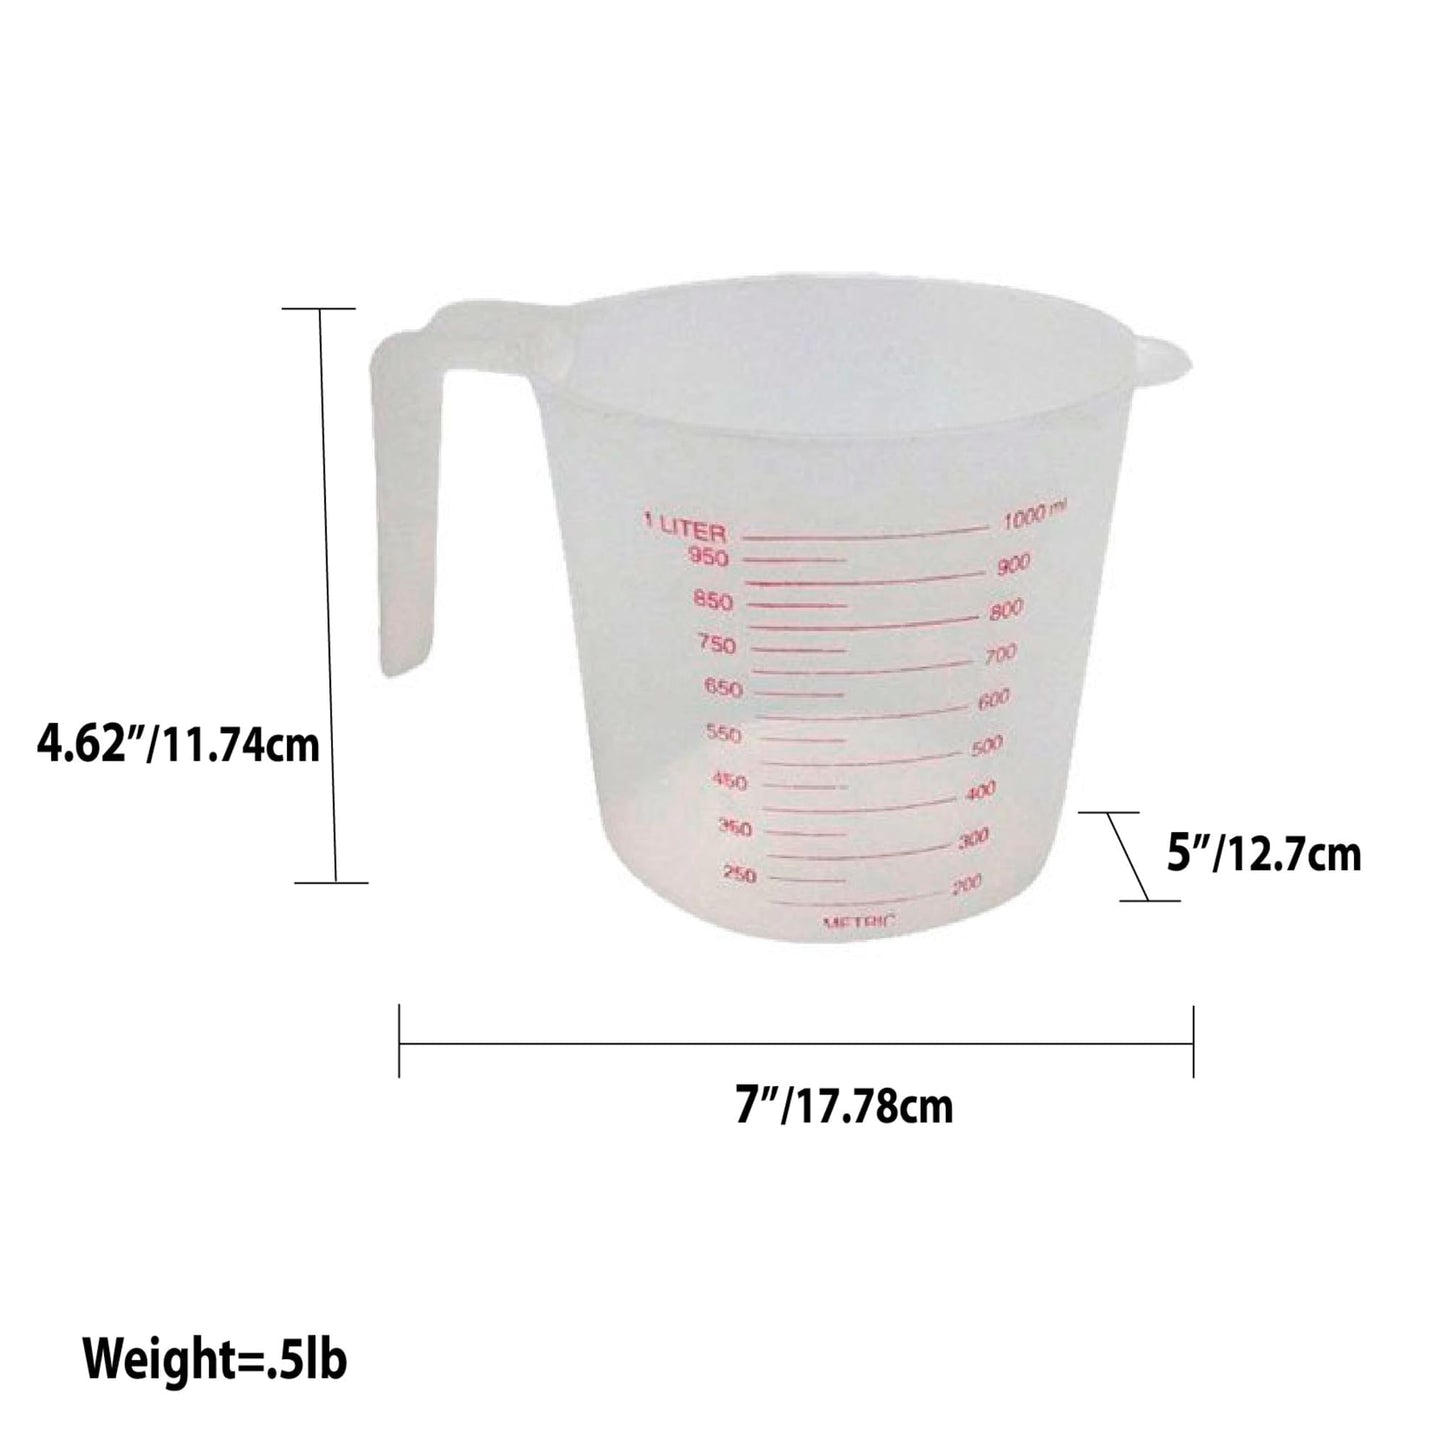 1 Liter Plastic Measuring Cup